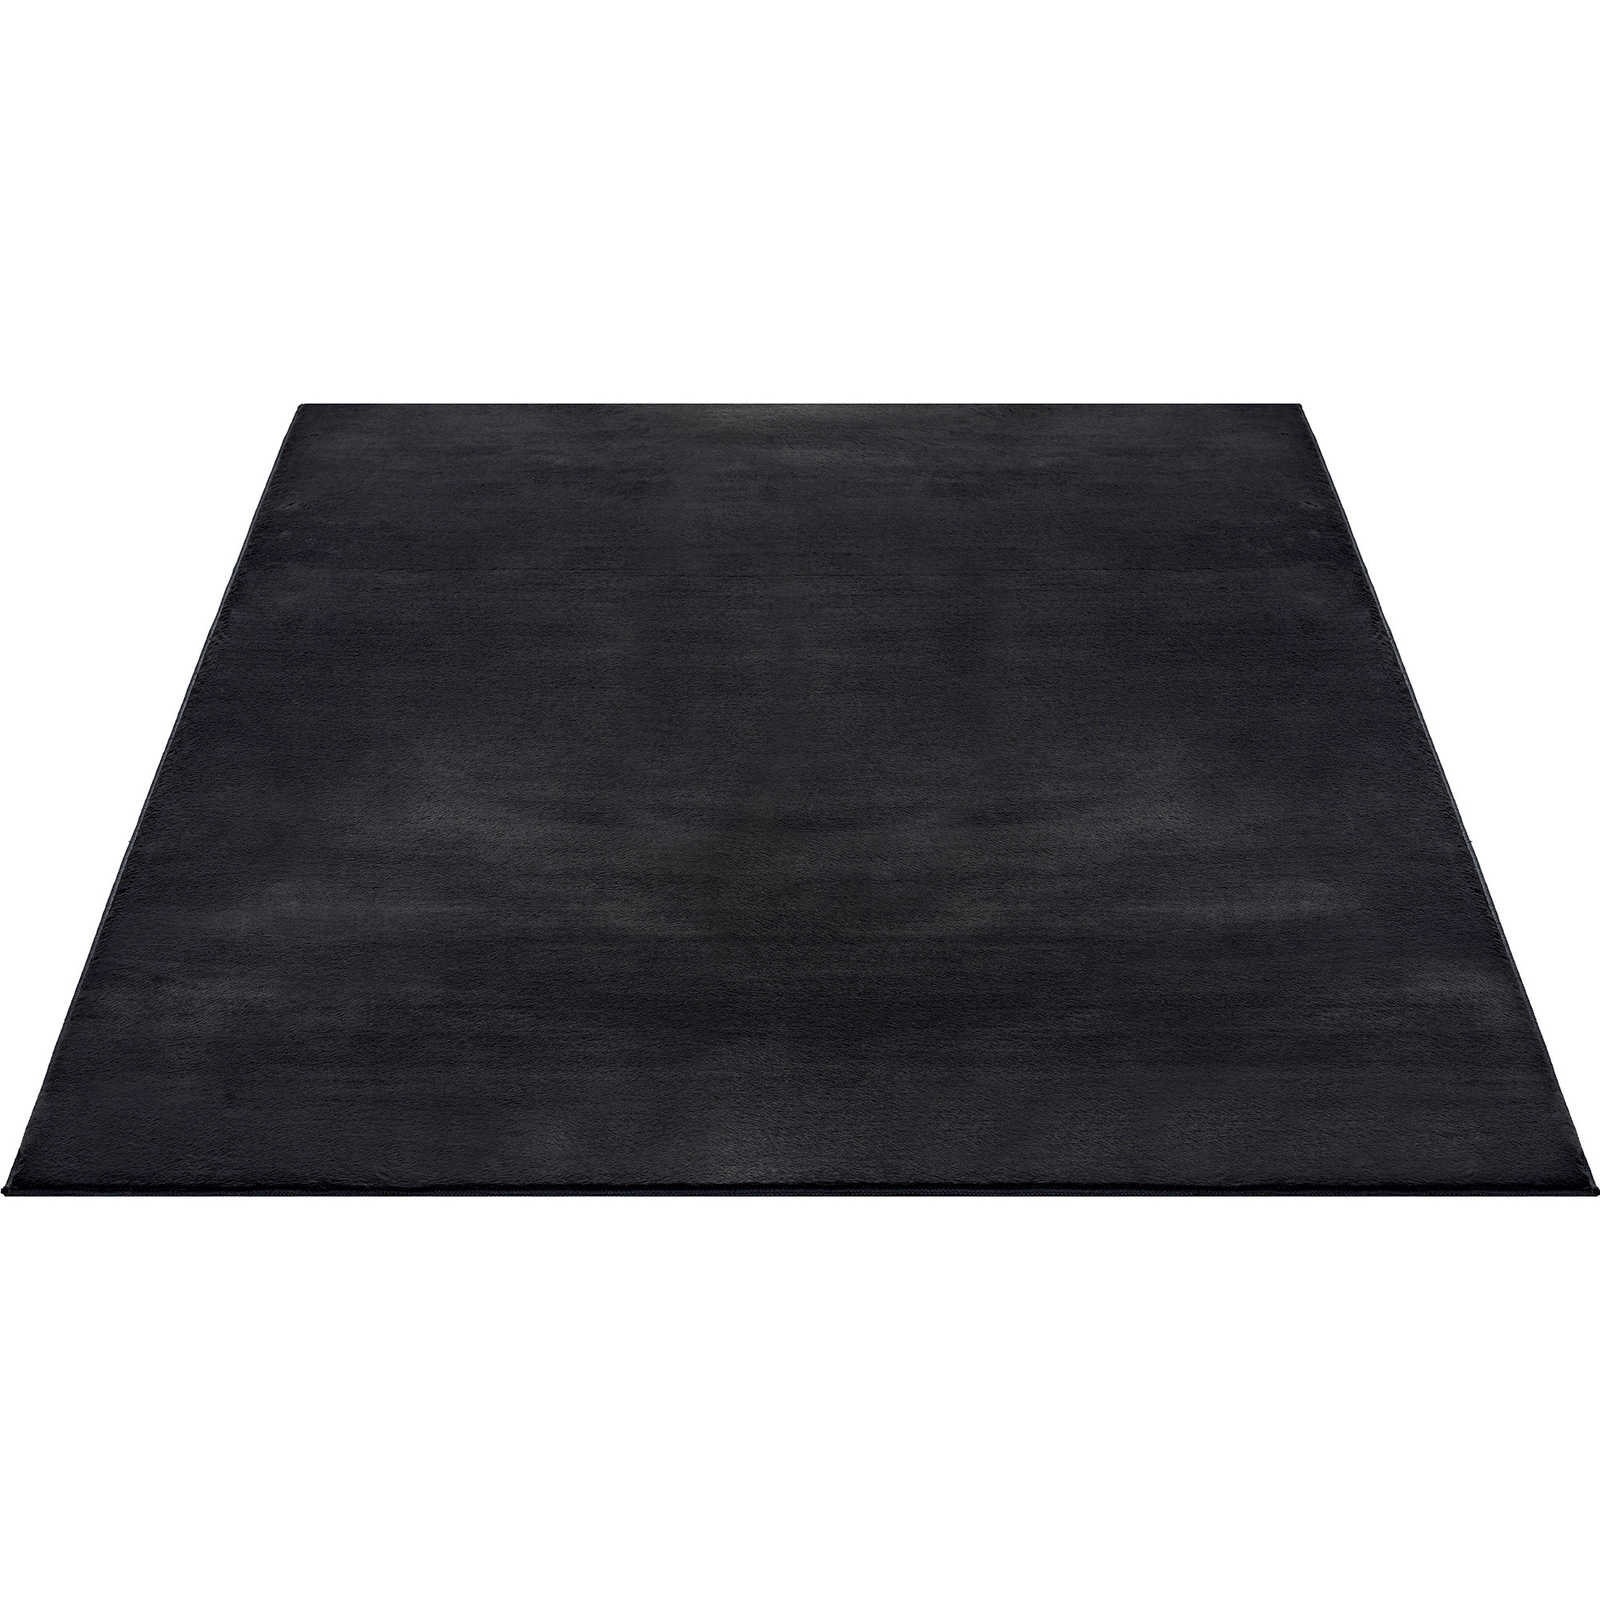 Knuffelzacht hoogpolig tapijt in zwart - 340 x 240 cm
